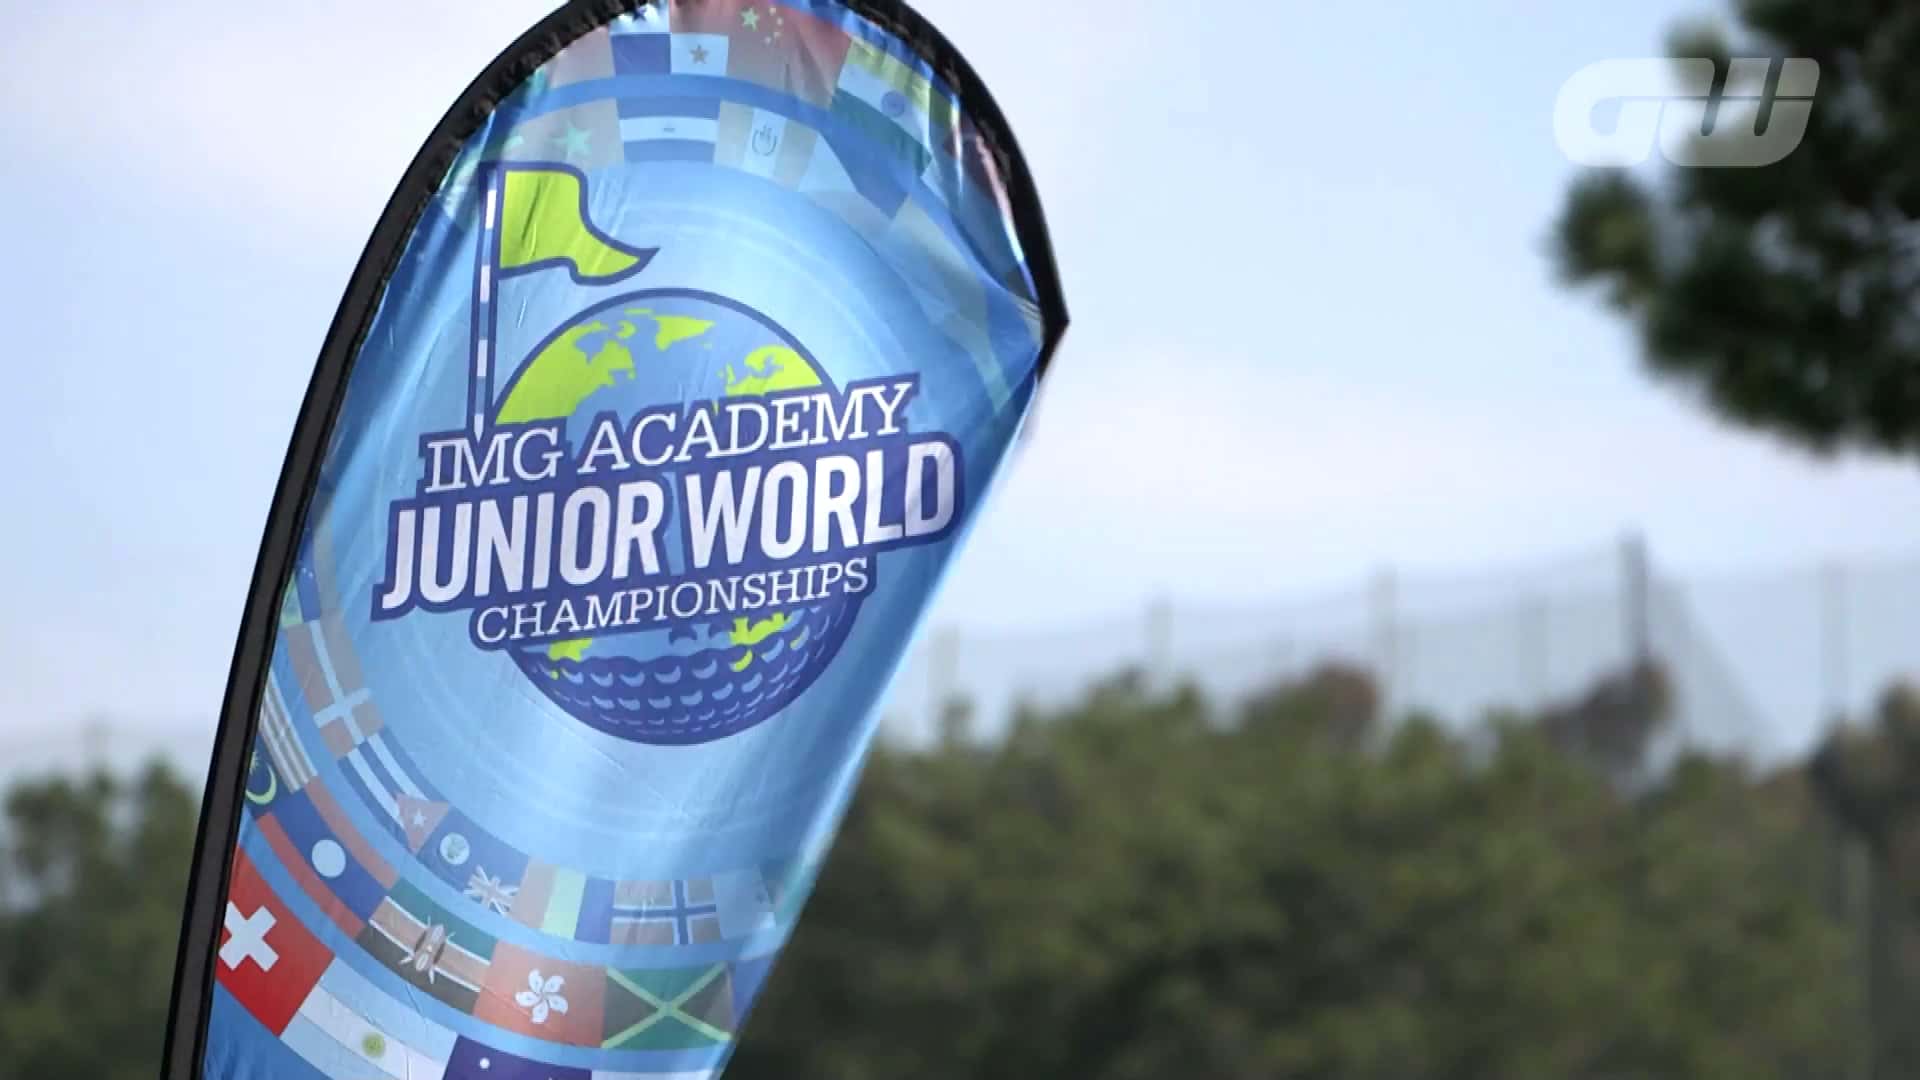 img academy junior world championship